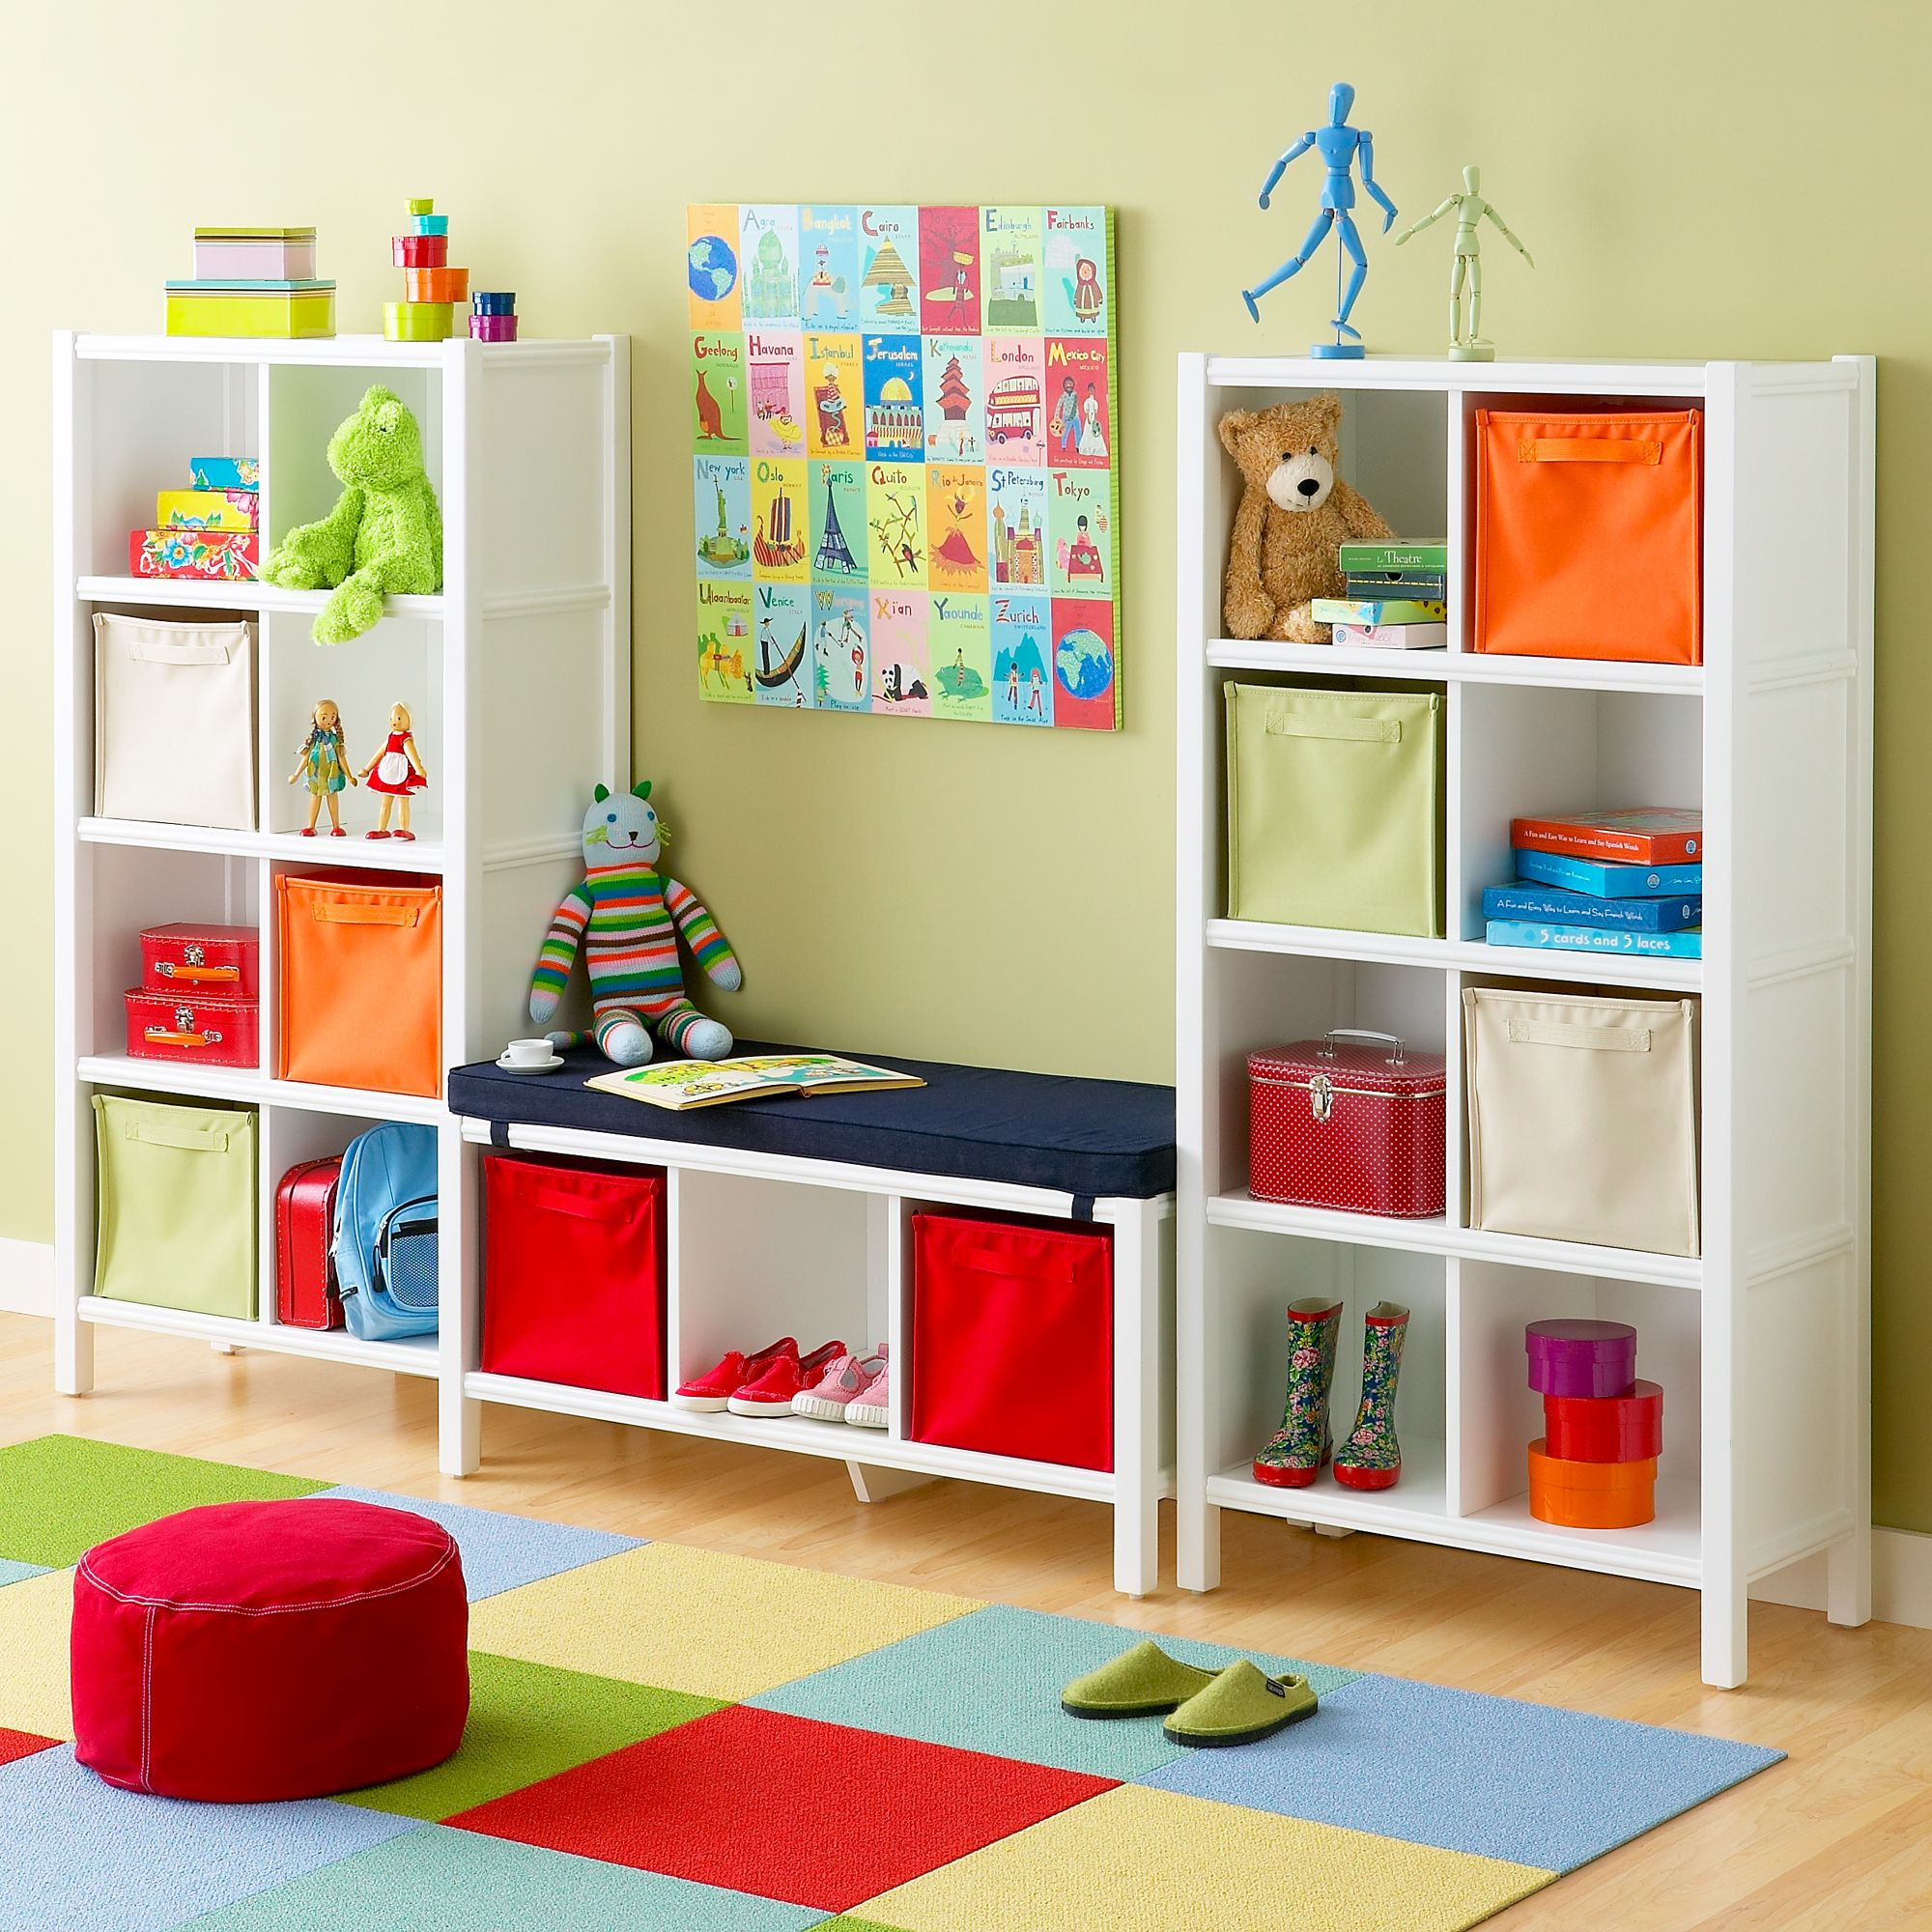 Kids Room Toy Storage
 Toy Storage